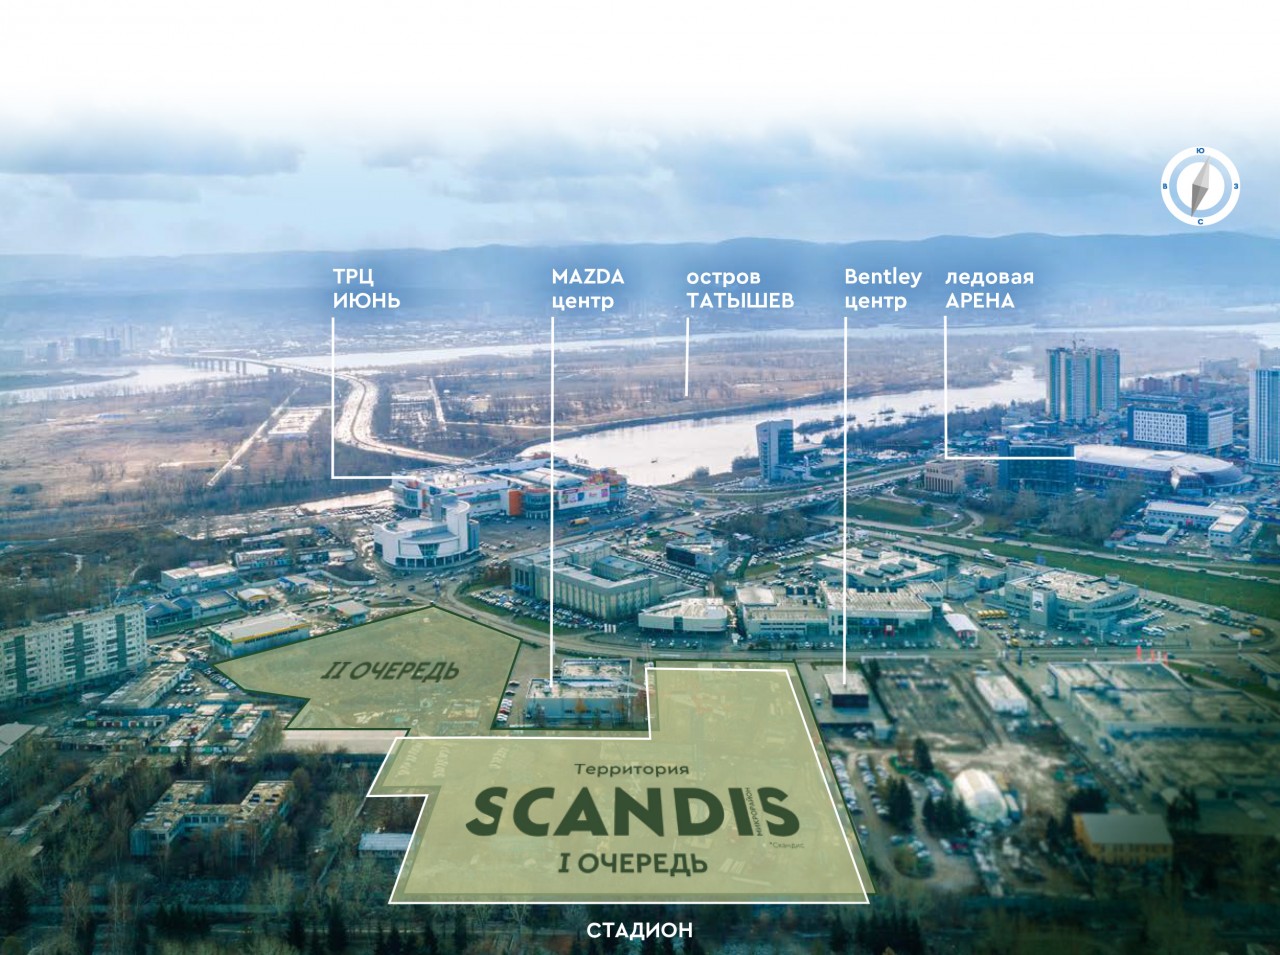 Scandis - план застройки микрорайона на большом фото